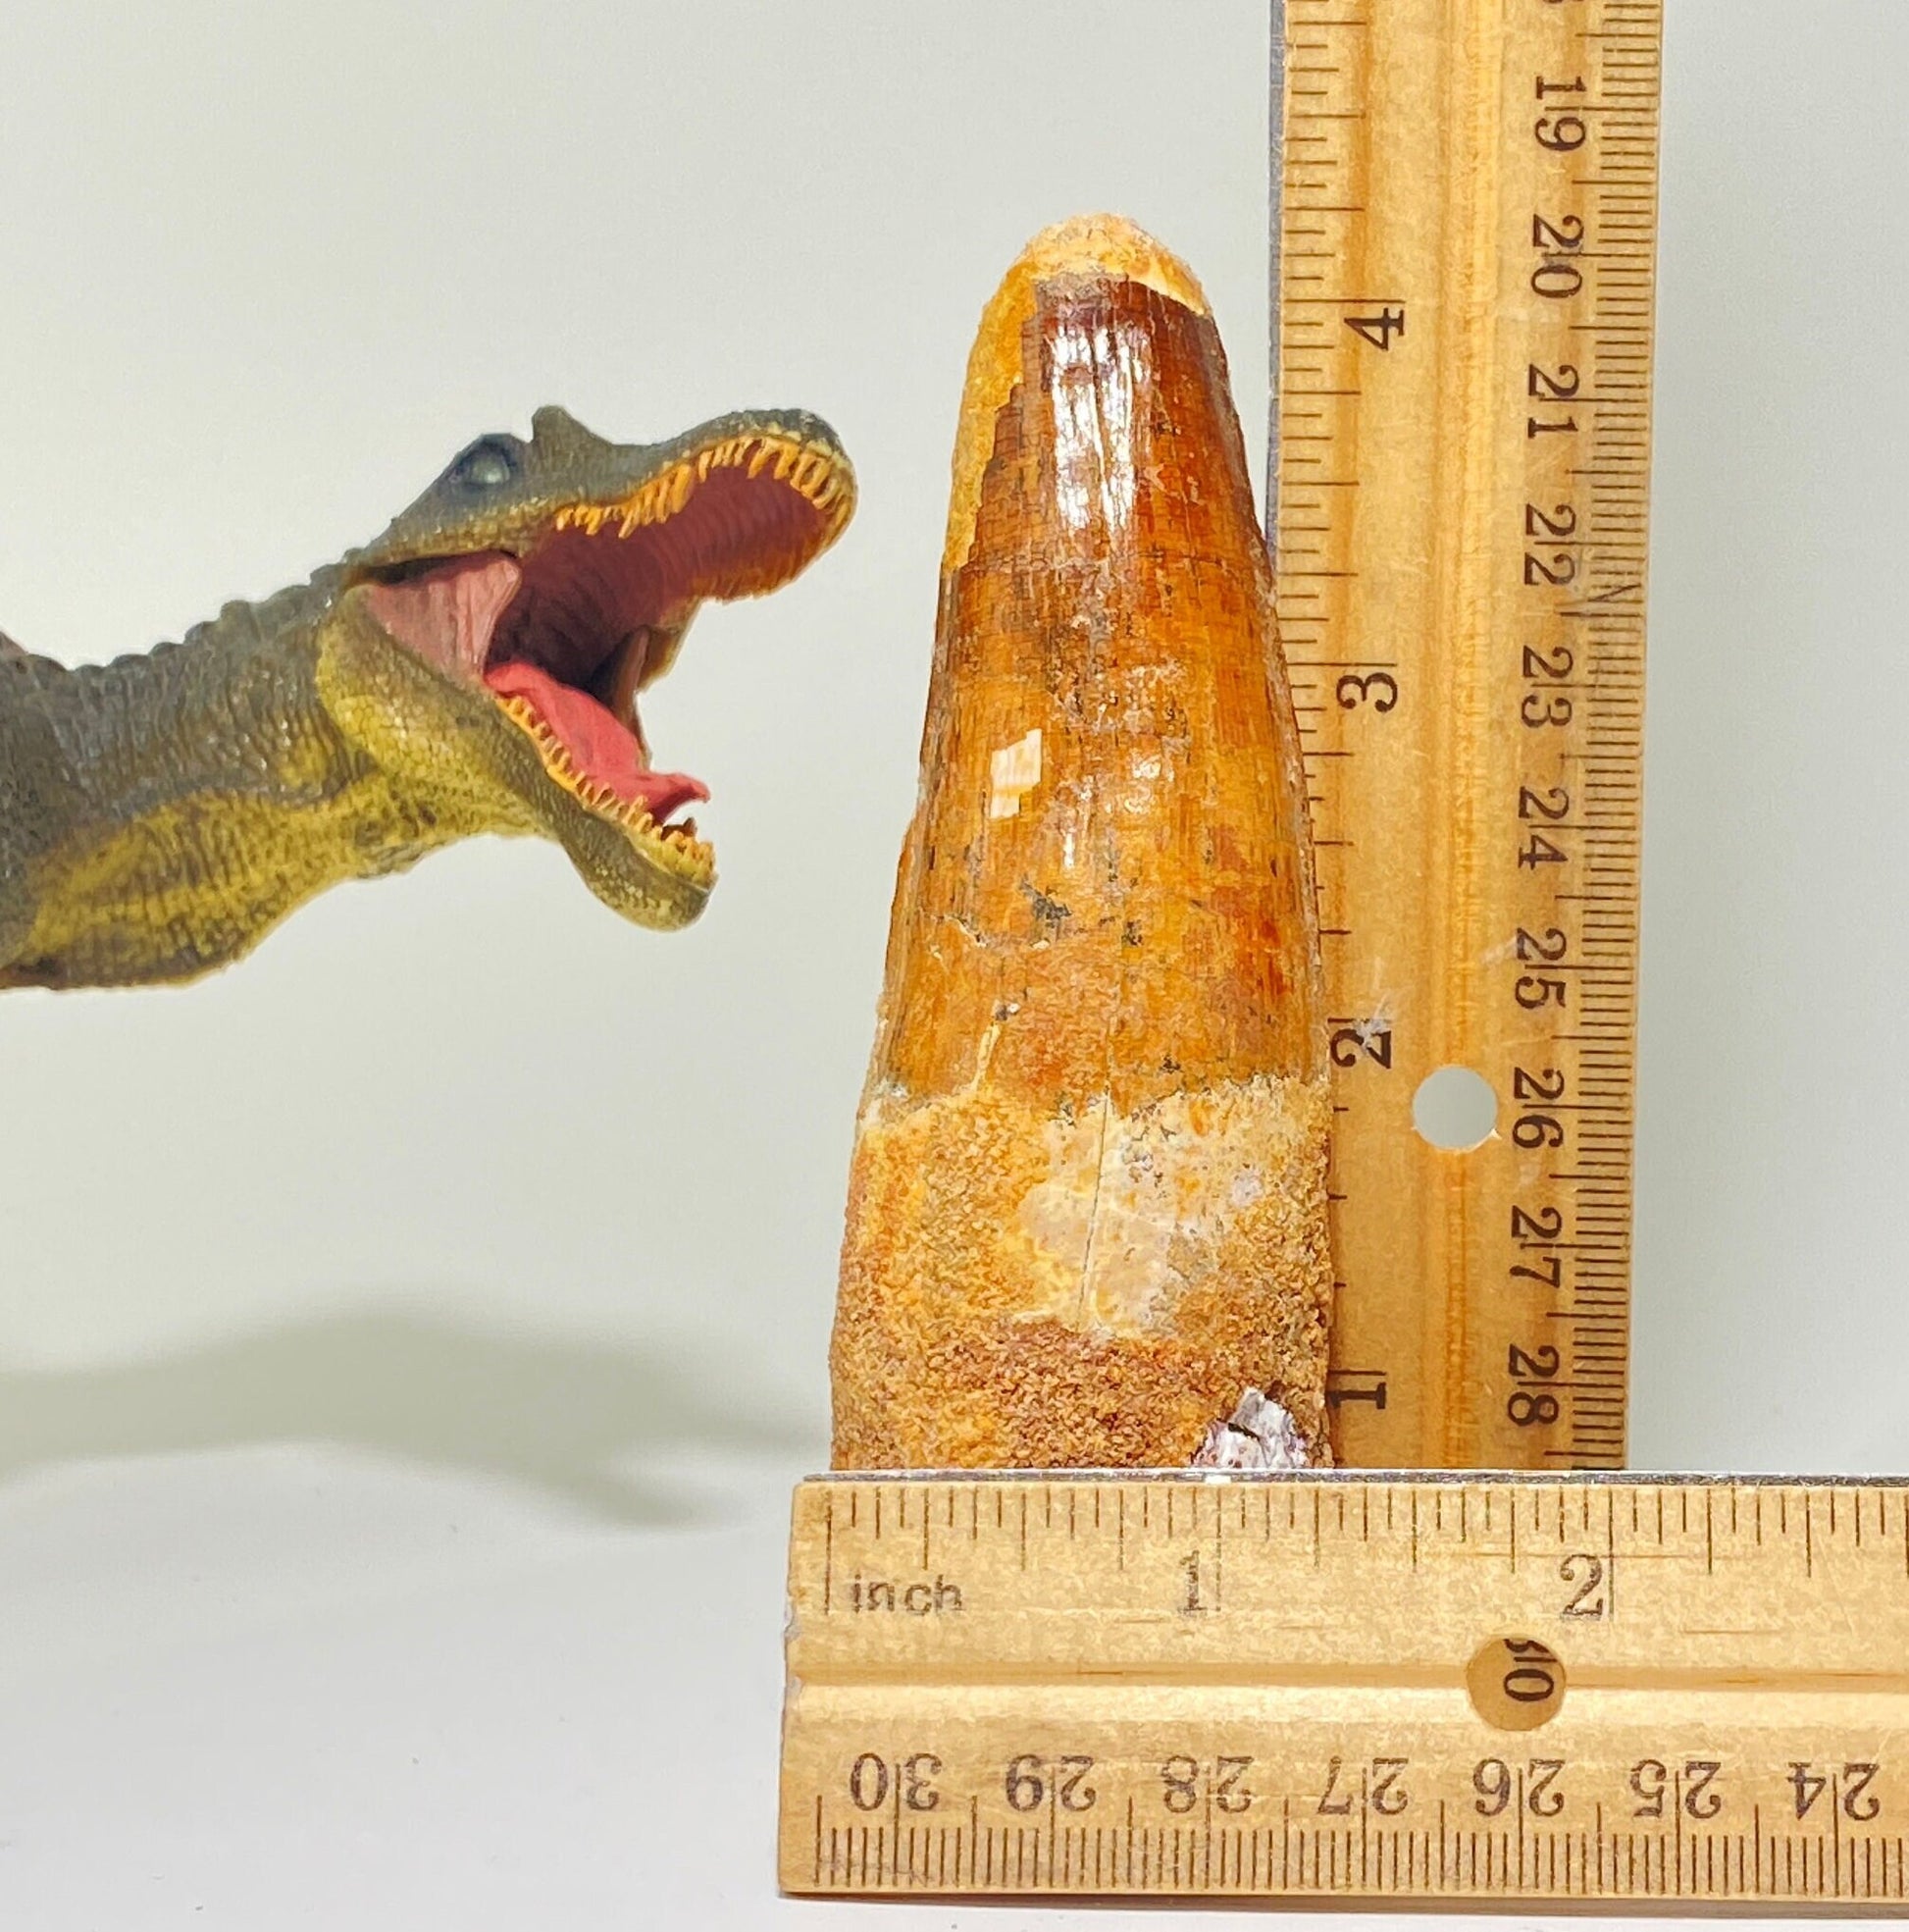 Real Spinosaurus tooth